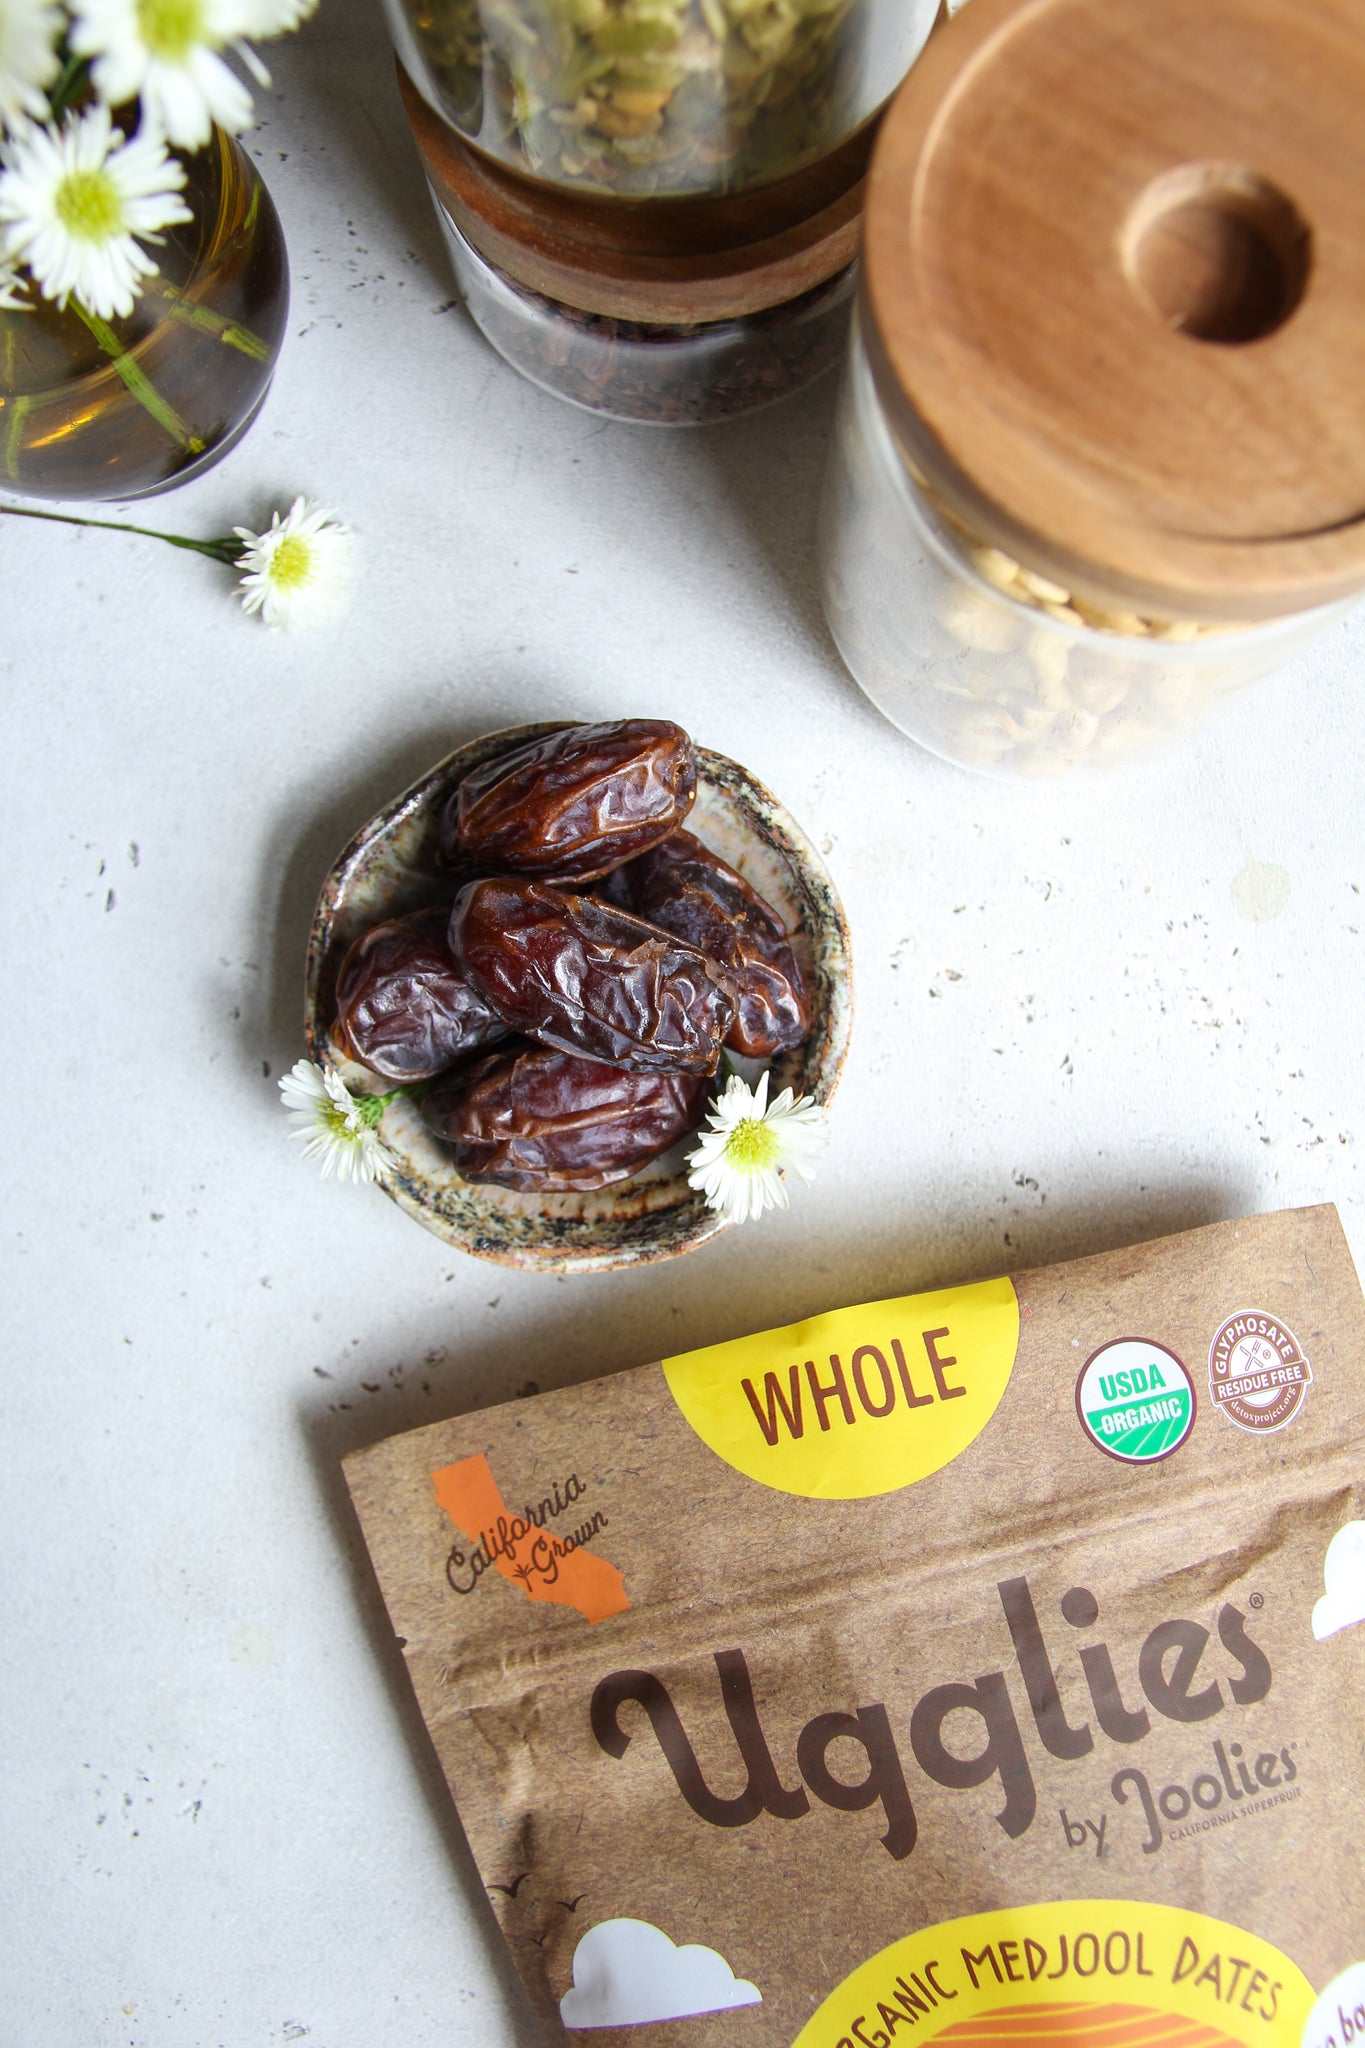 Ugglies by Joolies - Whole Organic Medjool Dates - 2LB BAG